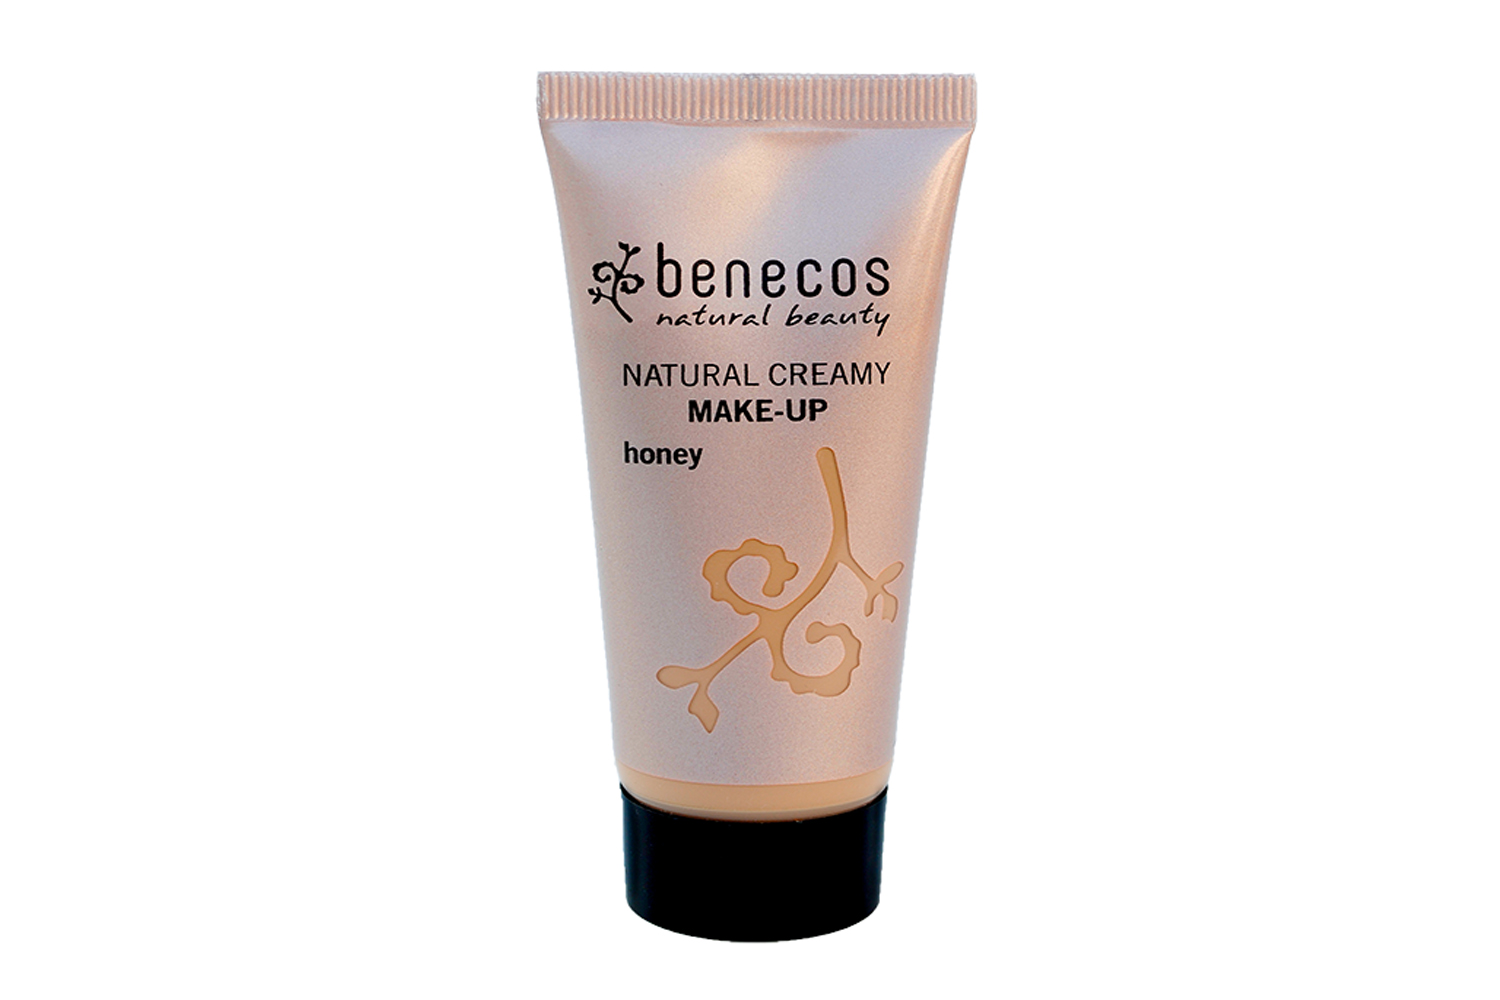 Benecos Natural Creamy Makeup, £8.95, Holland & Barrett